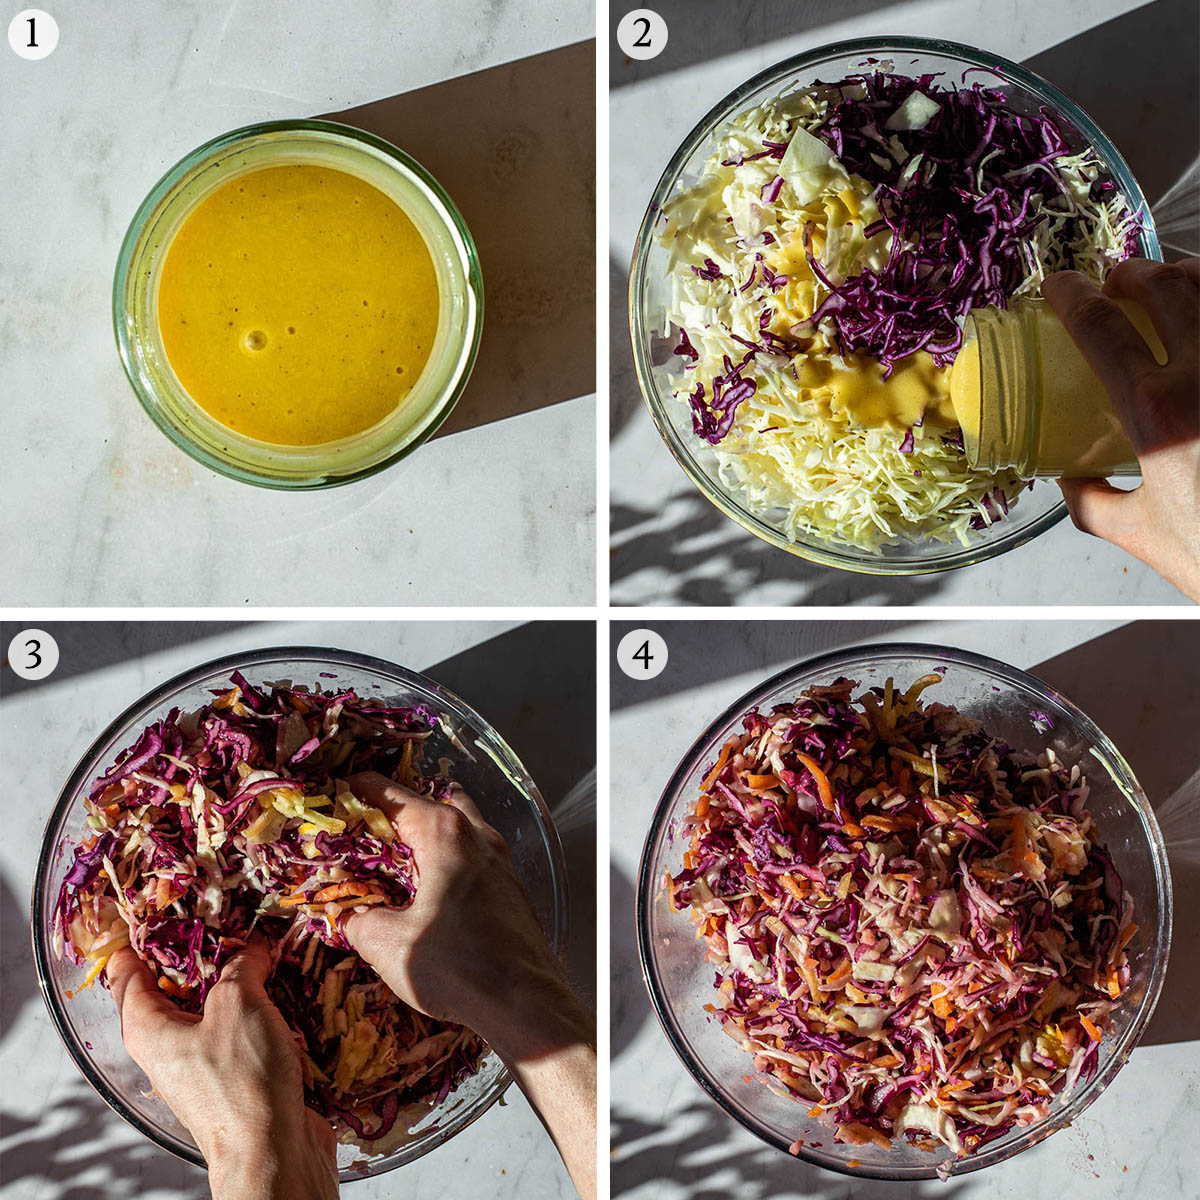 Vegan coleslaw steps 1 to 4.